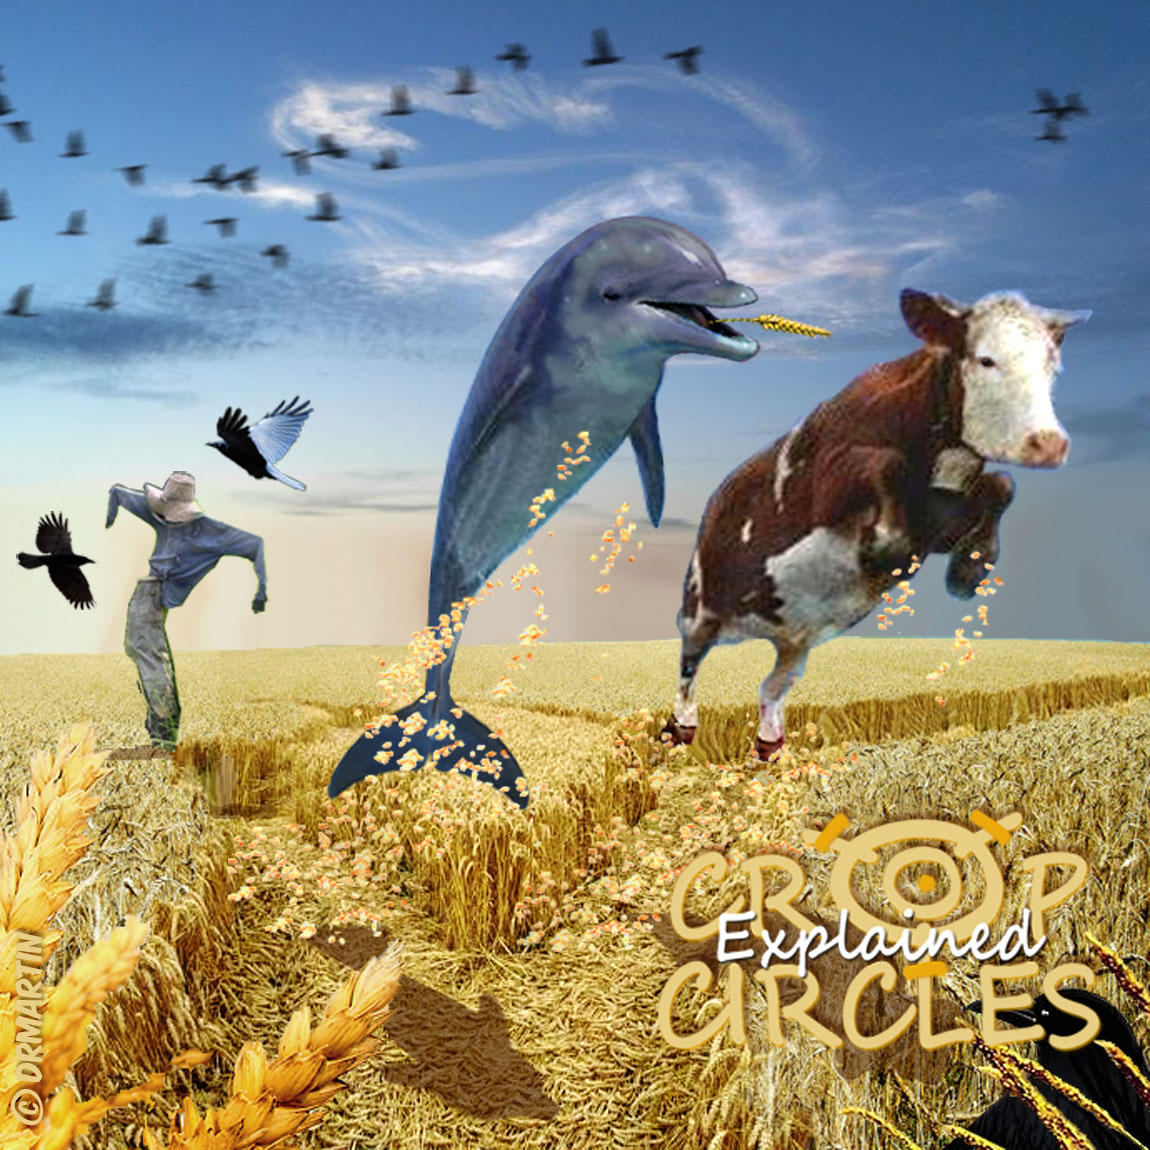 Crop Circles Explained © 2011